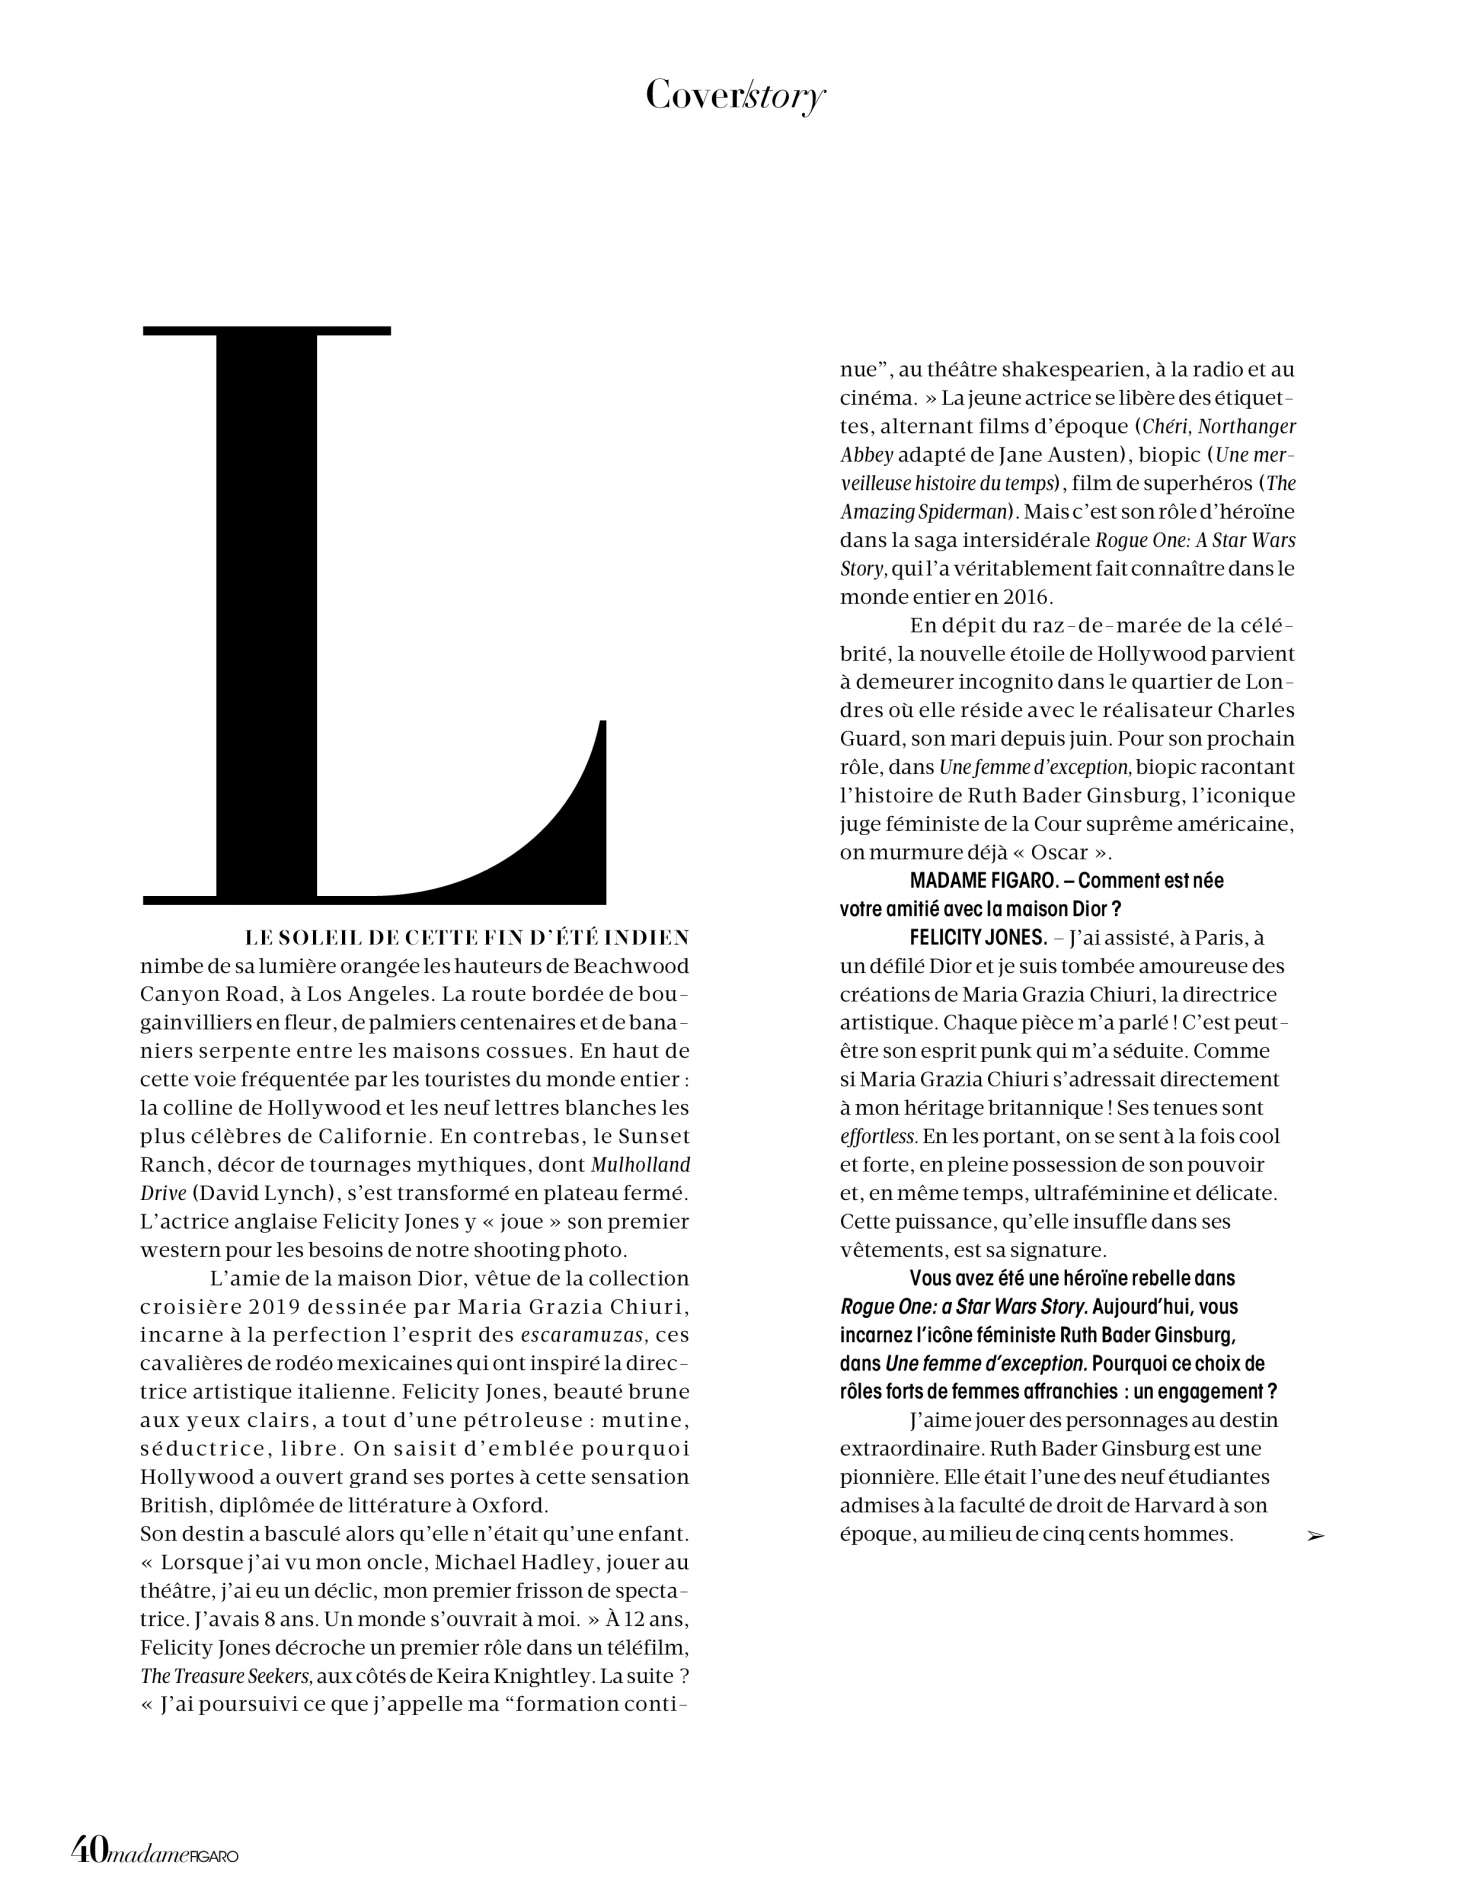 Felicity Jones â€“ Madame Figaro Magazine (December 2018)